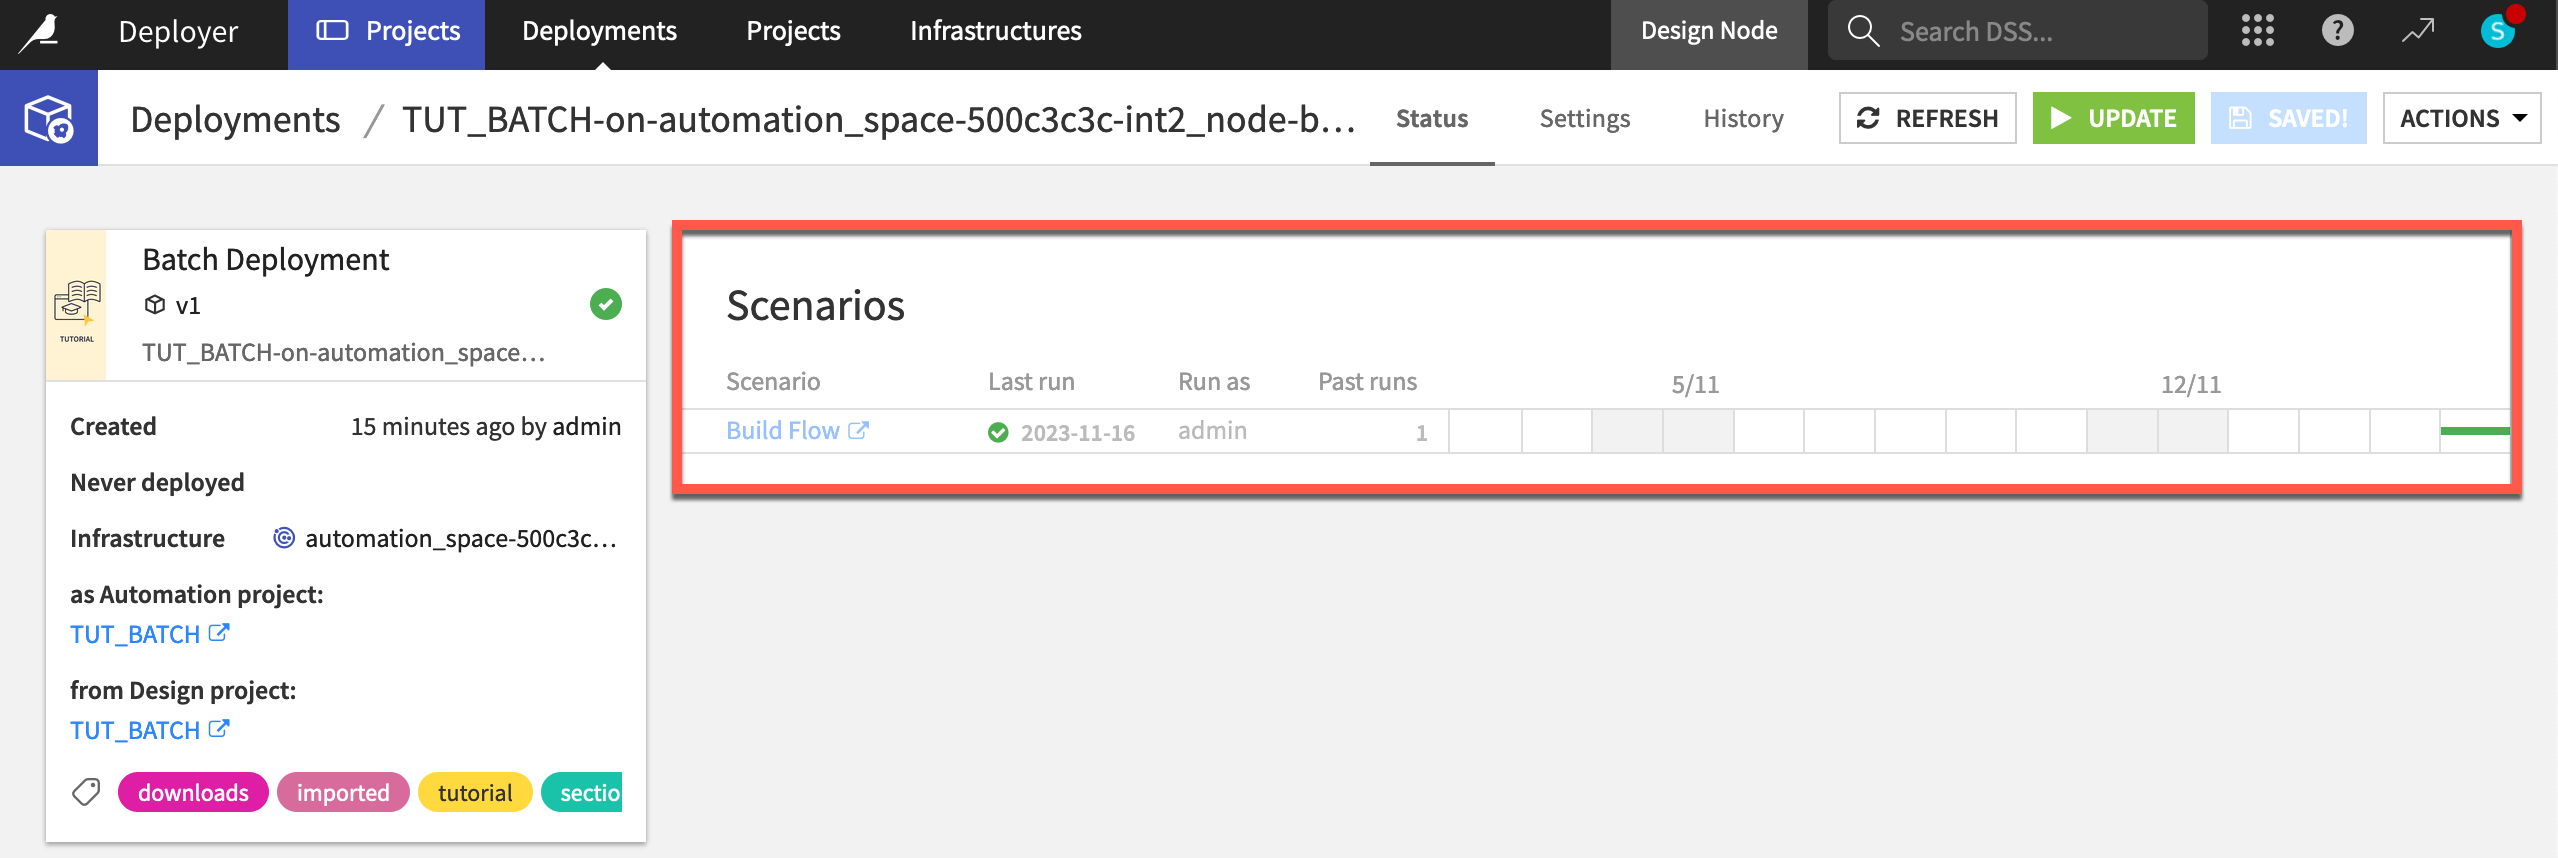 Dataiku screenshot of the Status tab of a deployment showing a scenario run.